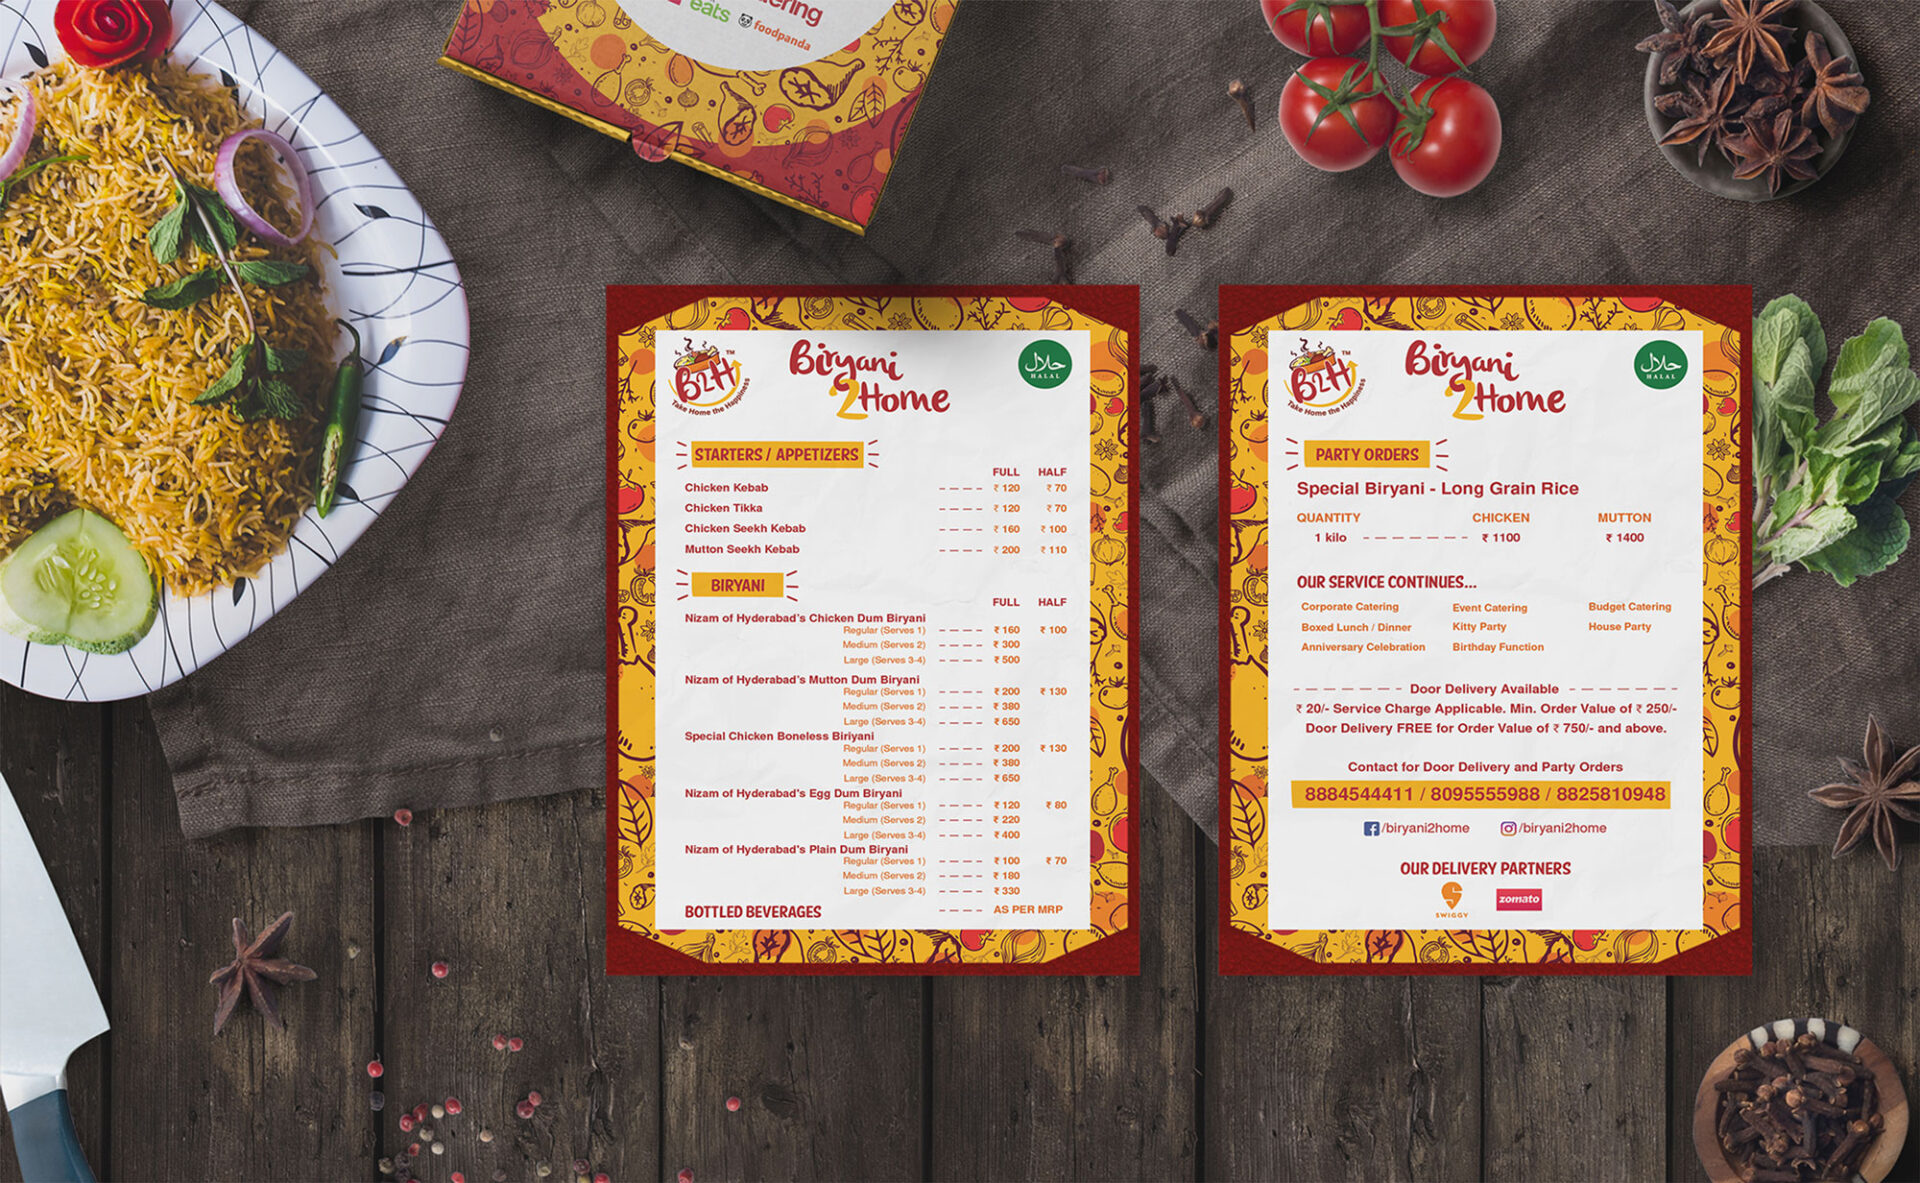 b2h-biriyani2home-menu-card-restaurant-takeaway-biriyani-outlet-branding-strategy-logo-design-consulting-services-agency-reinaphics-creatives-chennai-india